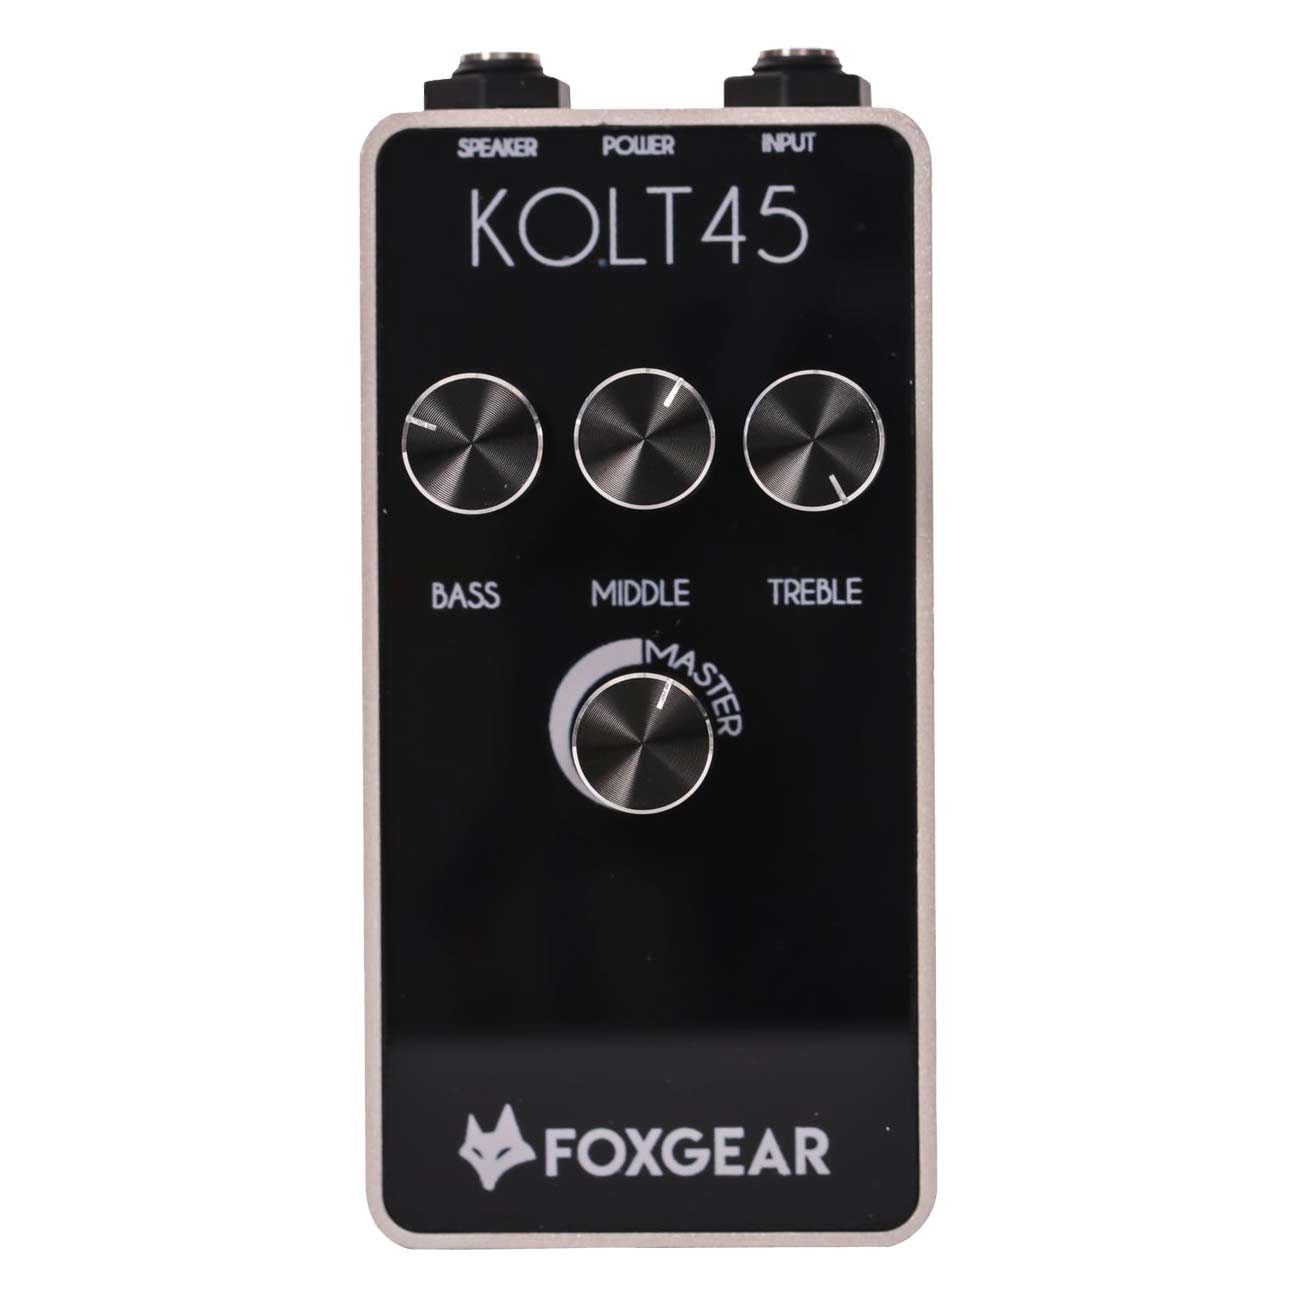 Foxgear Kolt 45 Guitar Amplifier - Pedal amplificador guitarra